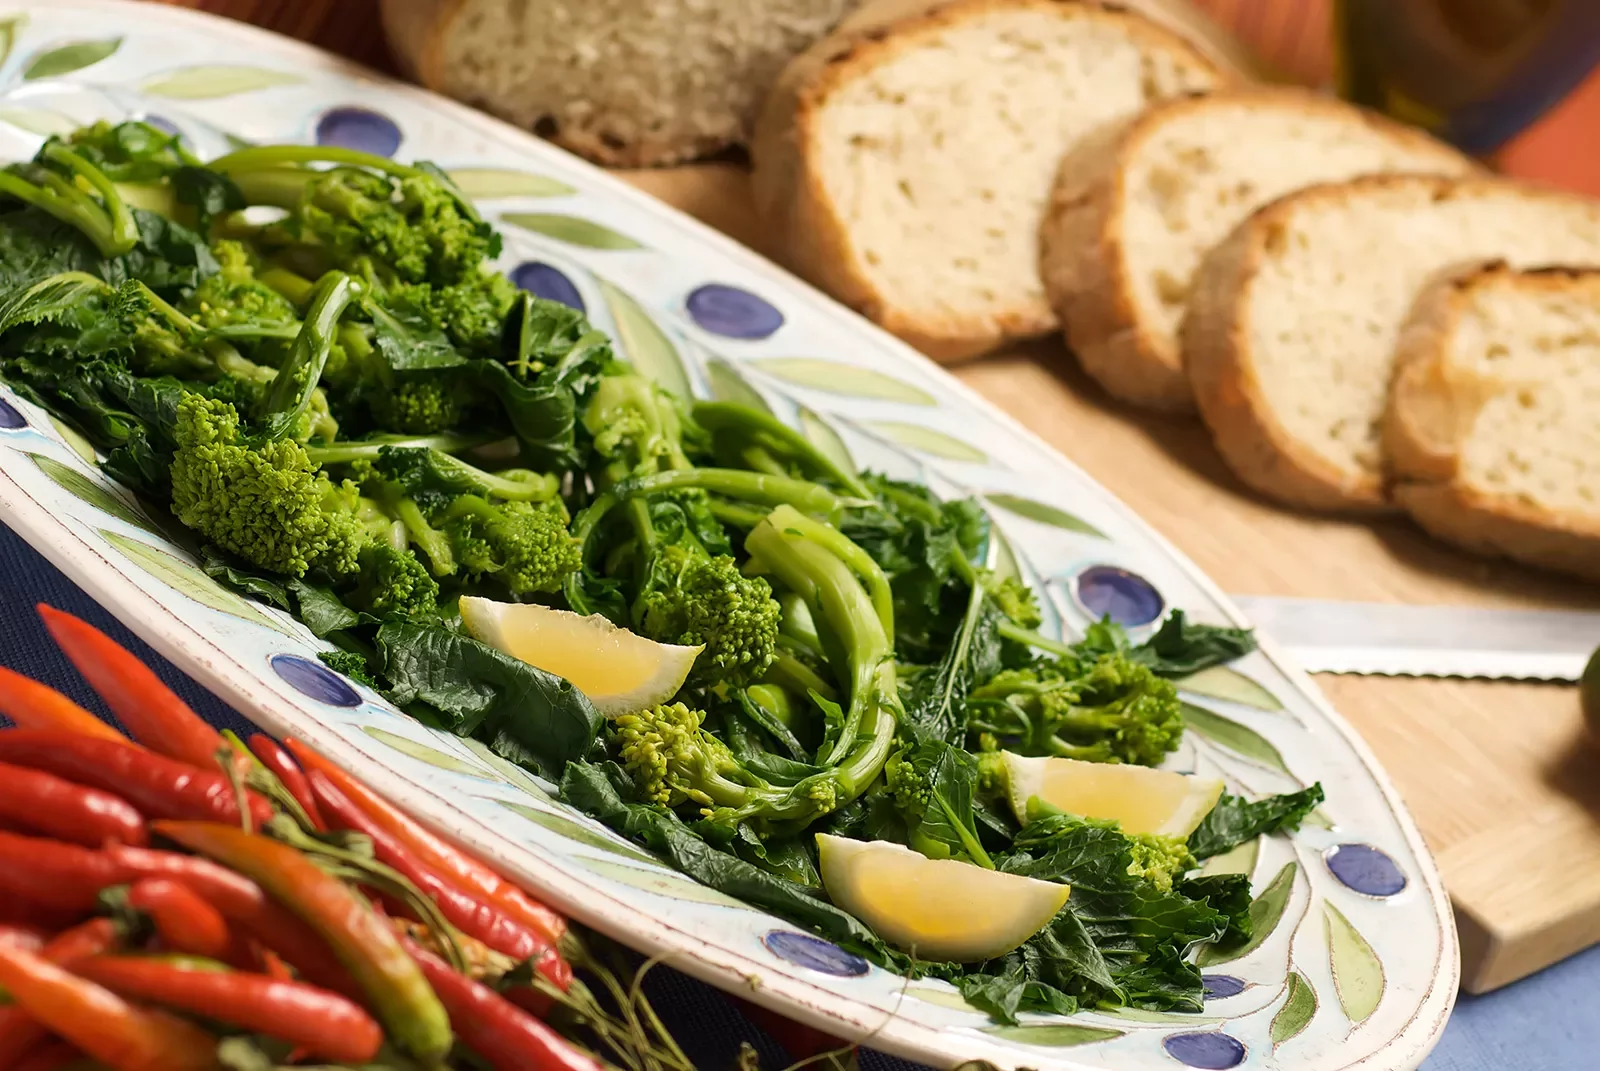 Platter of broccolini, chilis and bread.